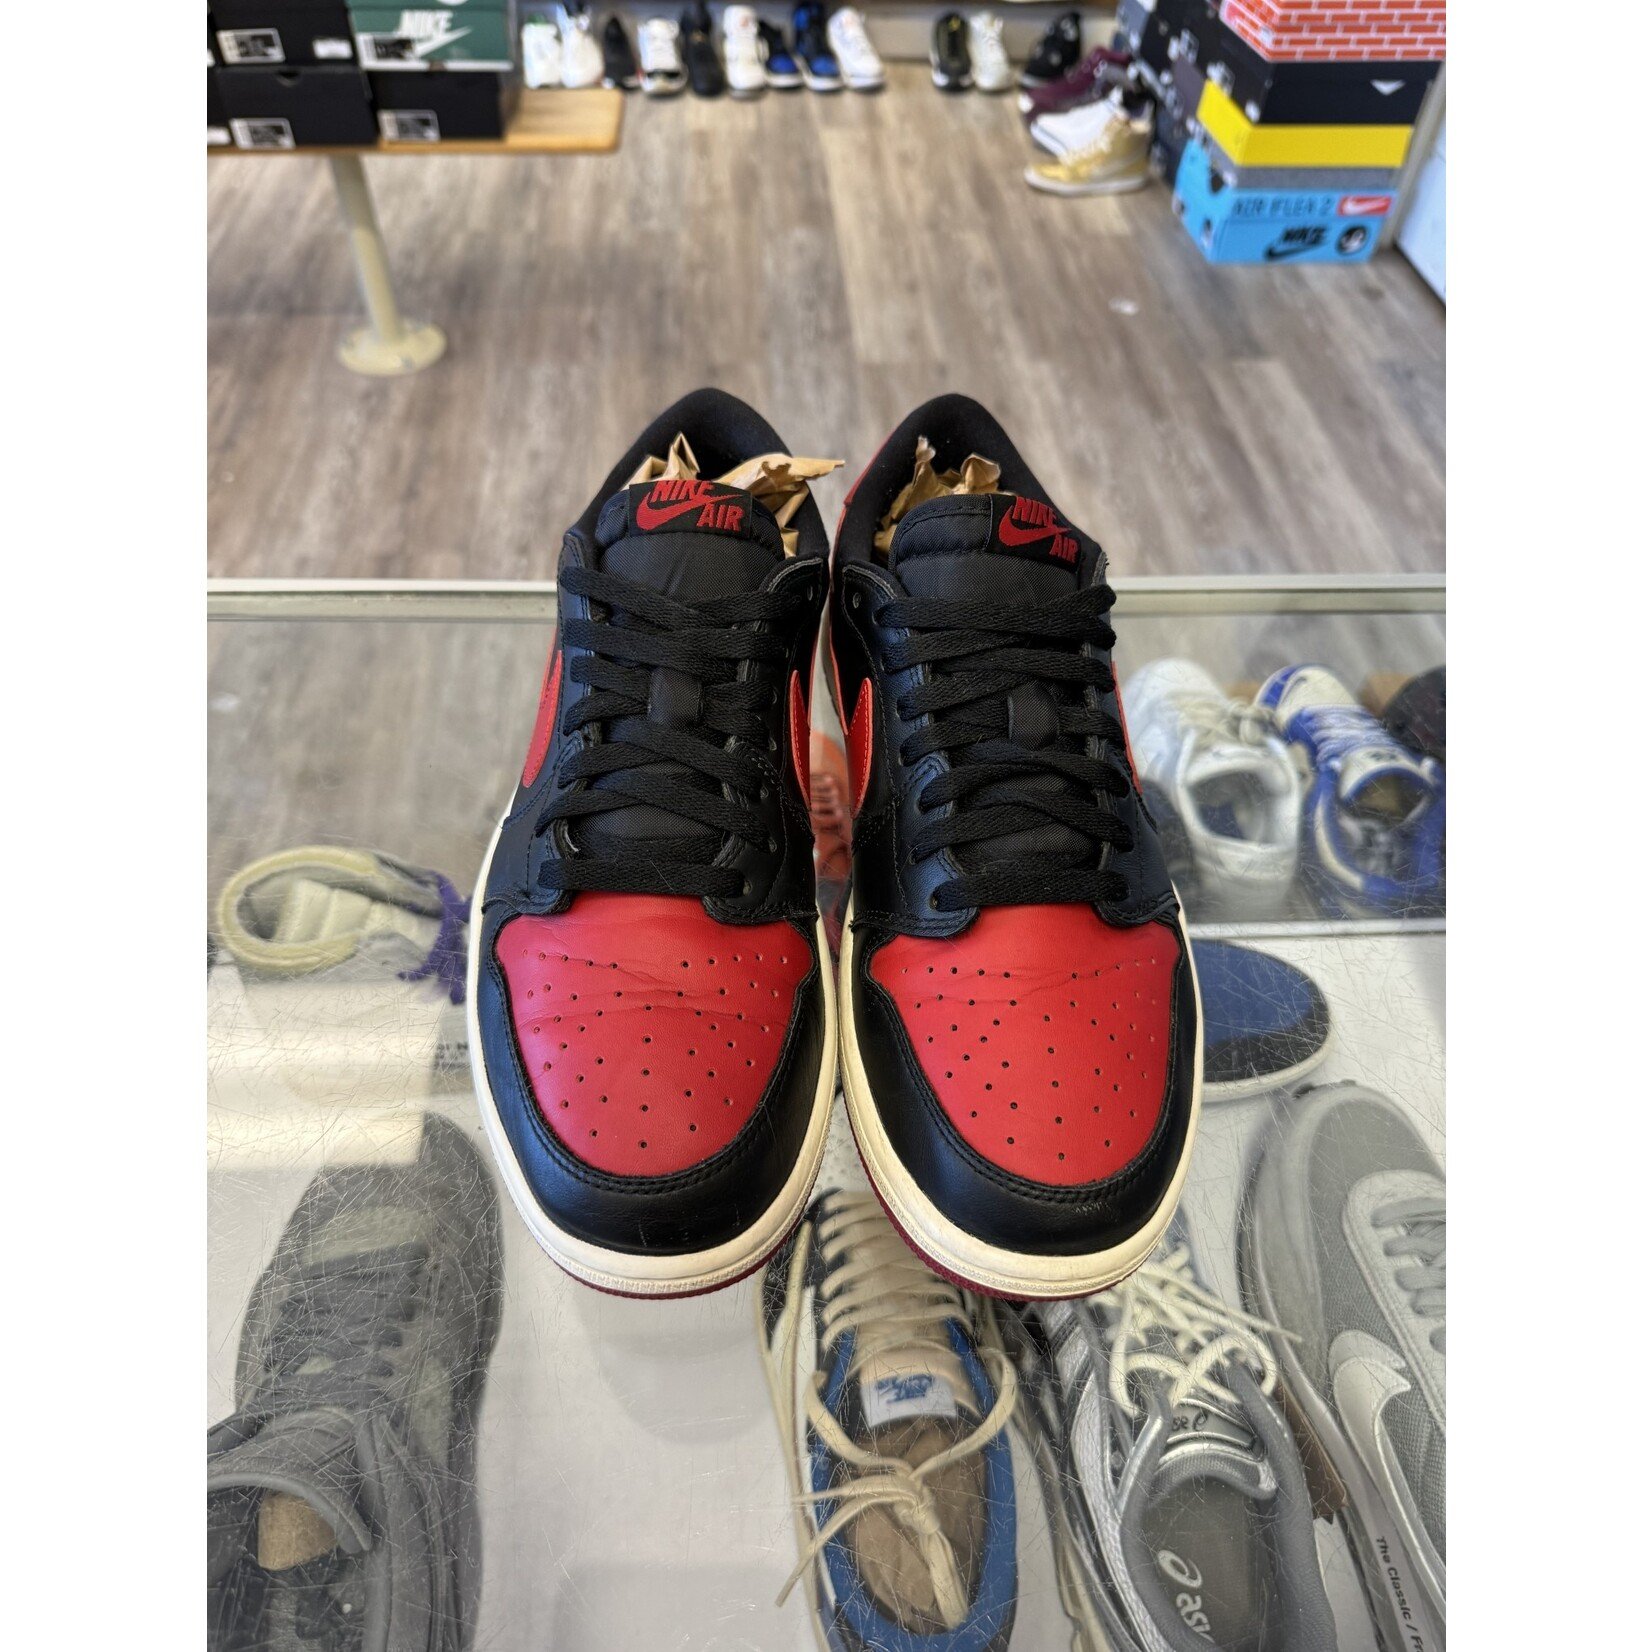 Jordan Jordan 1 Retro Low Bred (2015) Size 10, PREOWNED NO BOX